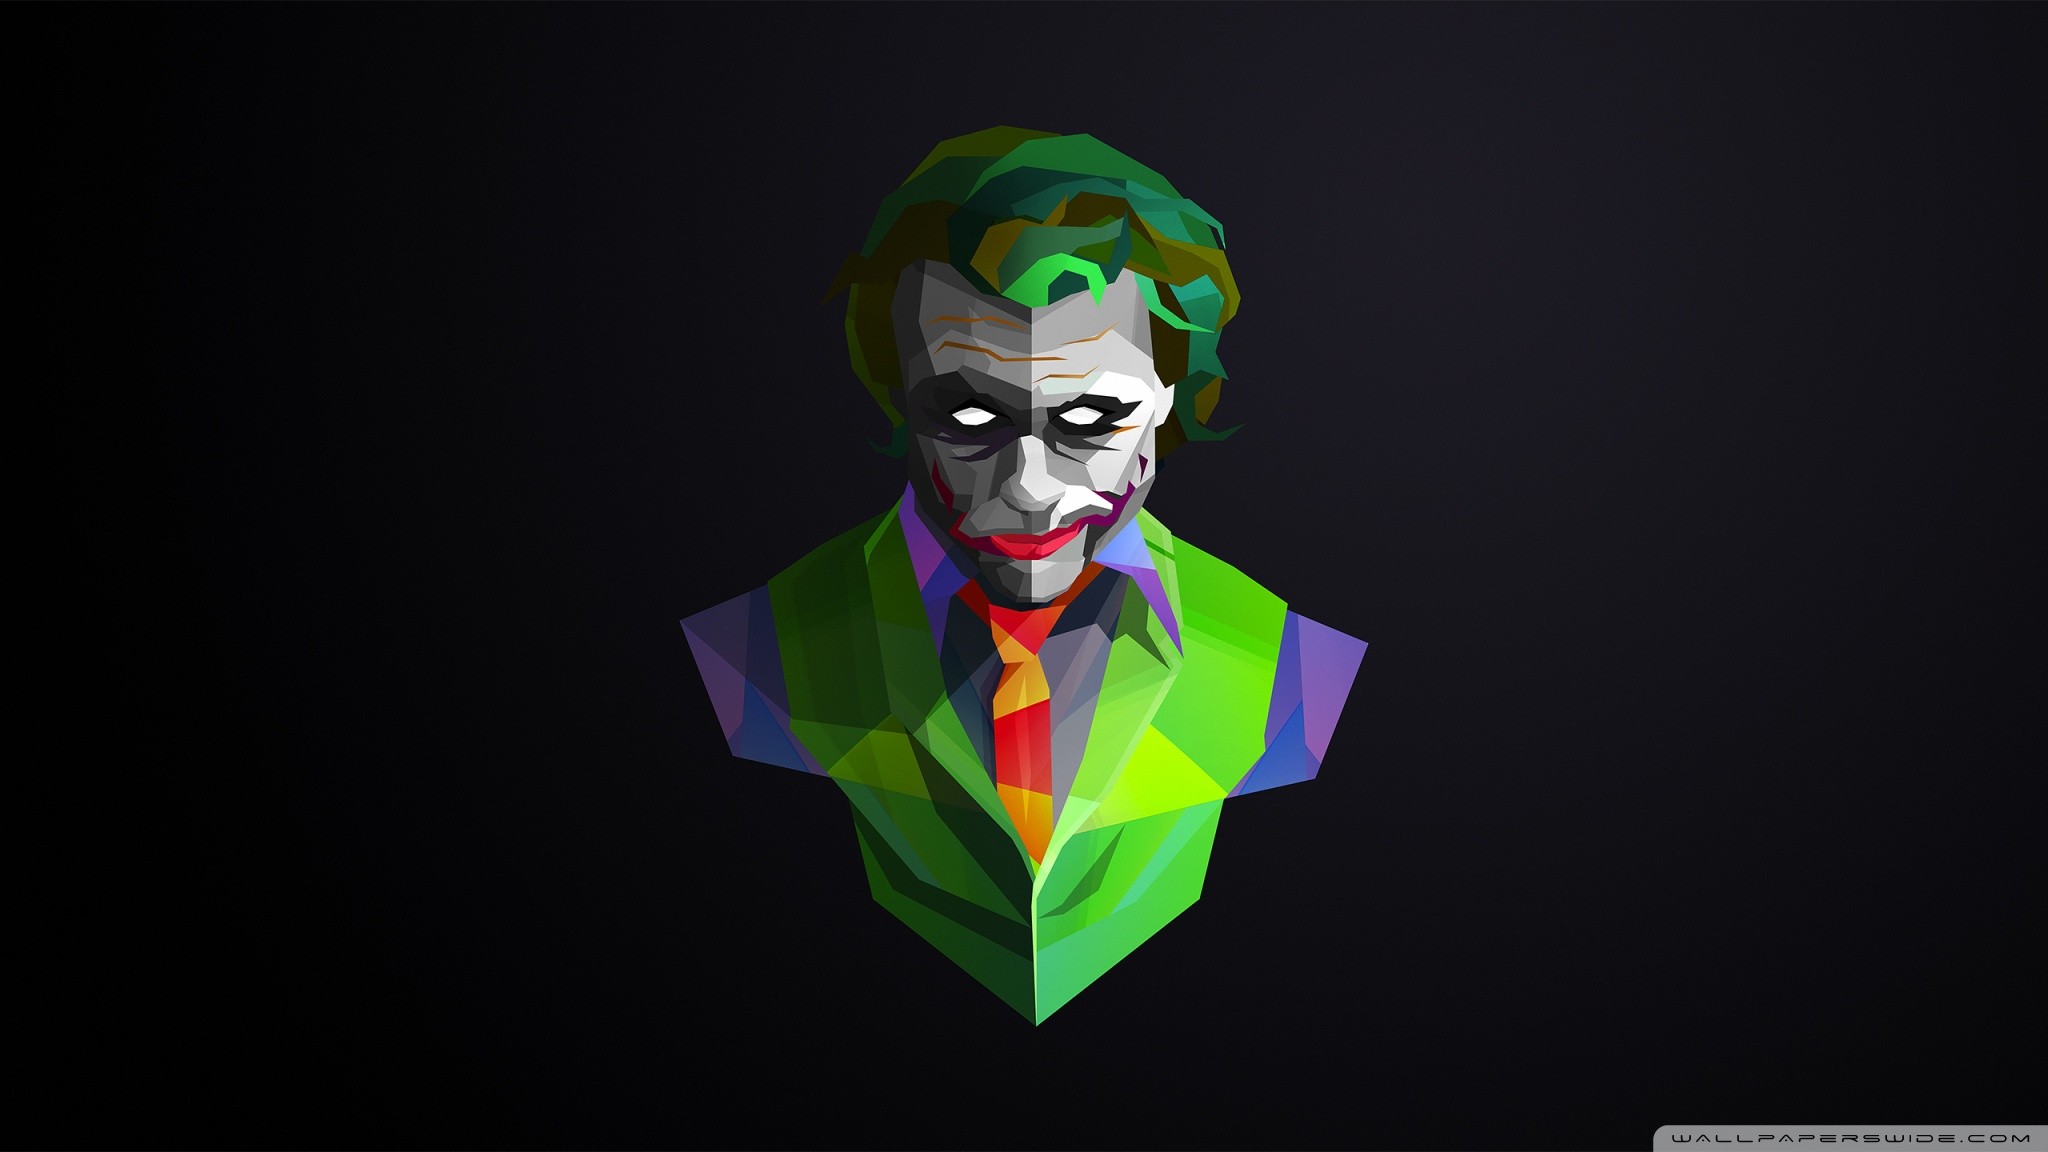 General 2048x1152 Joker Batman Justin Maller Heath Ledger The Dark Knight movies face digital art green hair simple background abstract